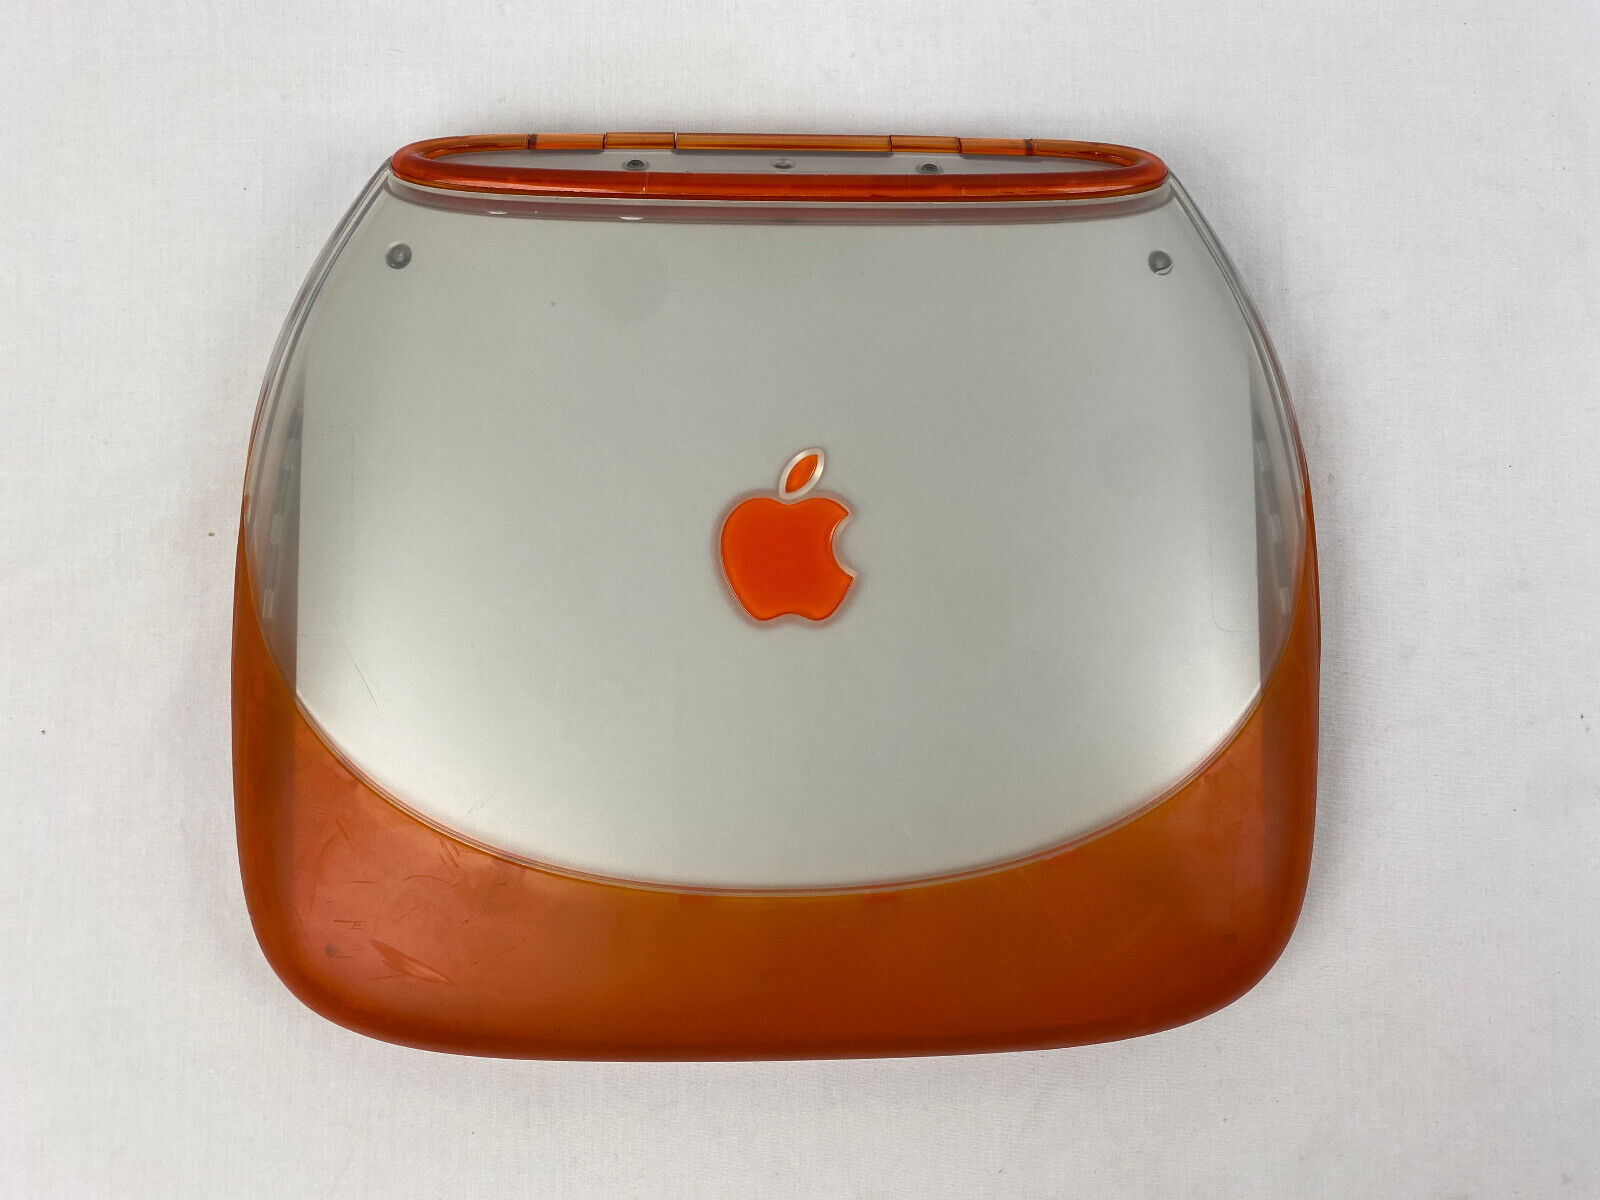 Vintage Apple iBook G3 My Family M2453 Clamshell Tangerine Orange UNTESTED